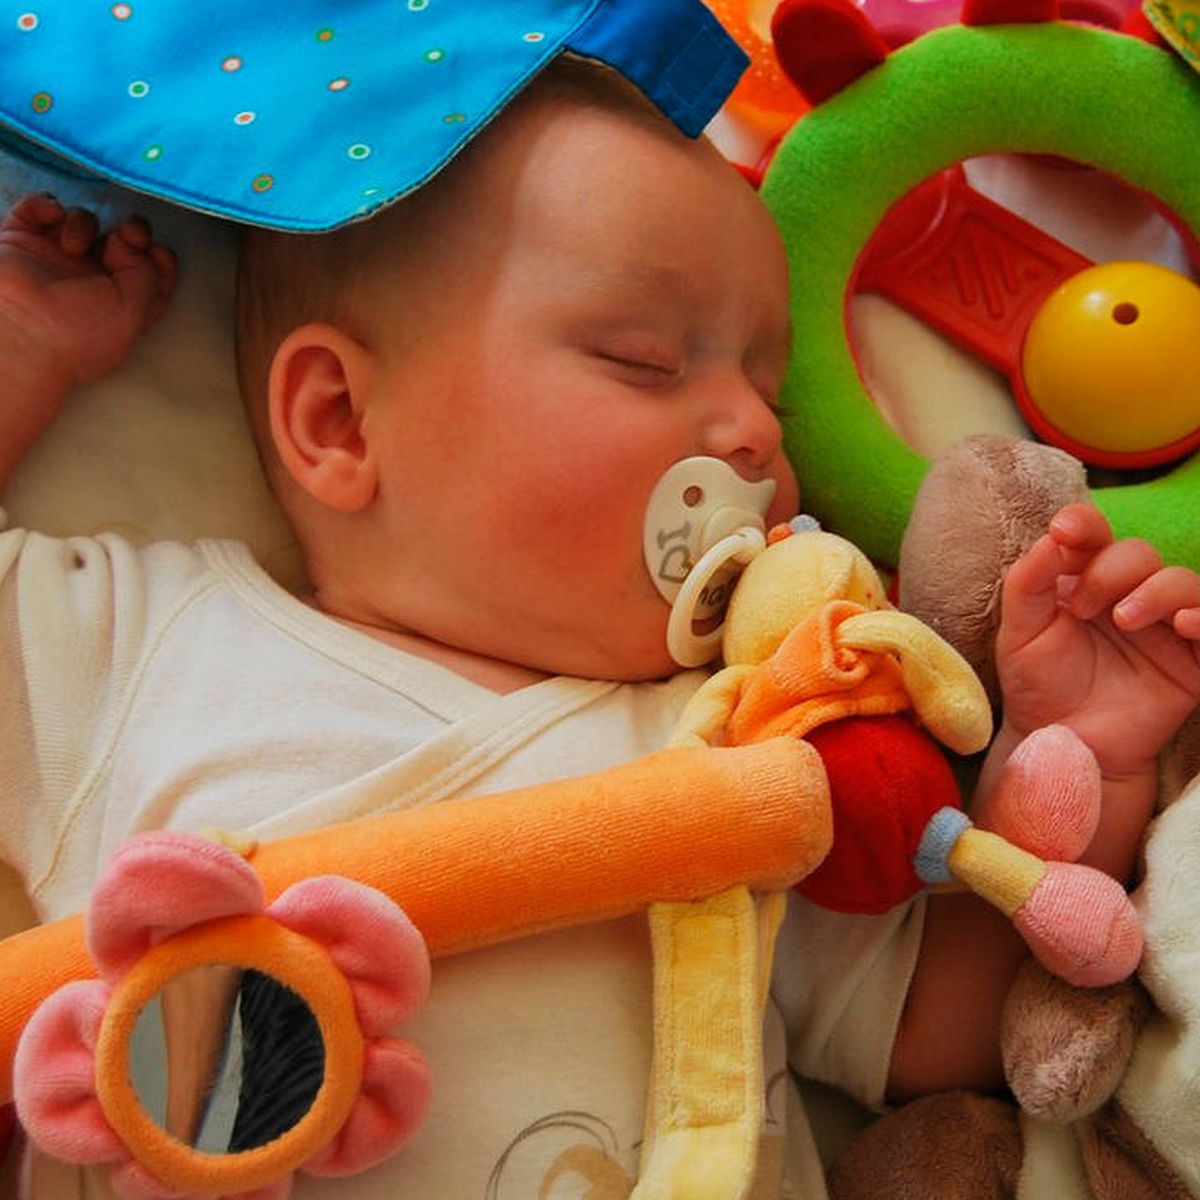 Juegos y juguetes para bebés de 6 a 9 meses